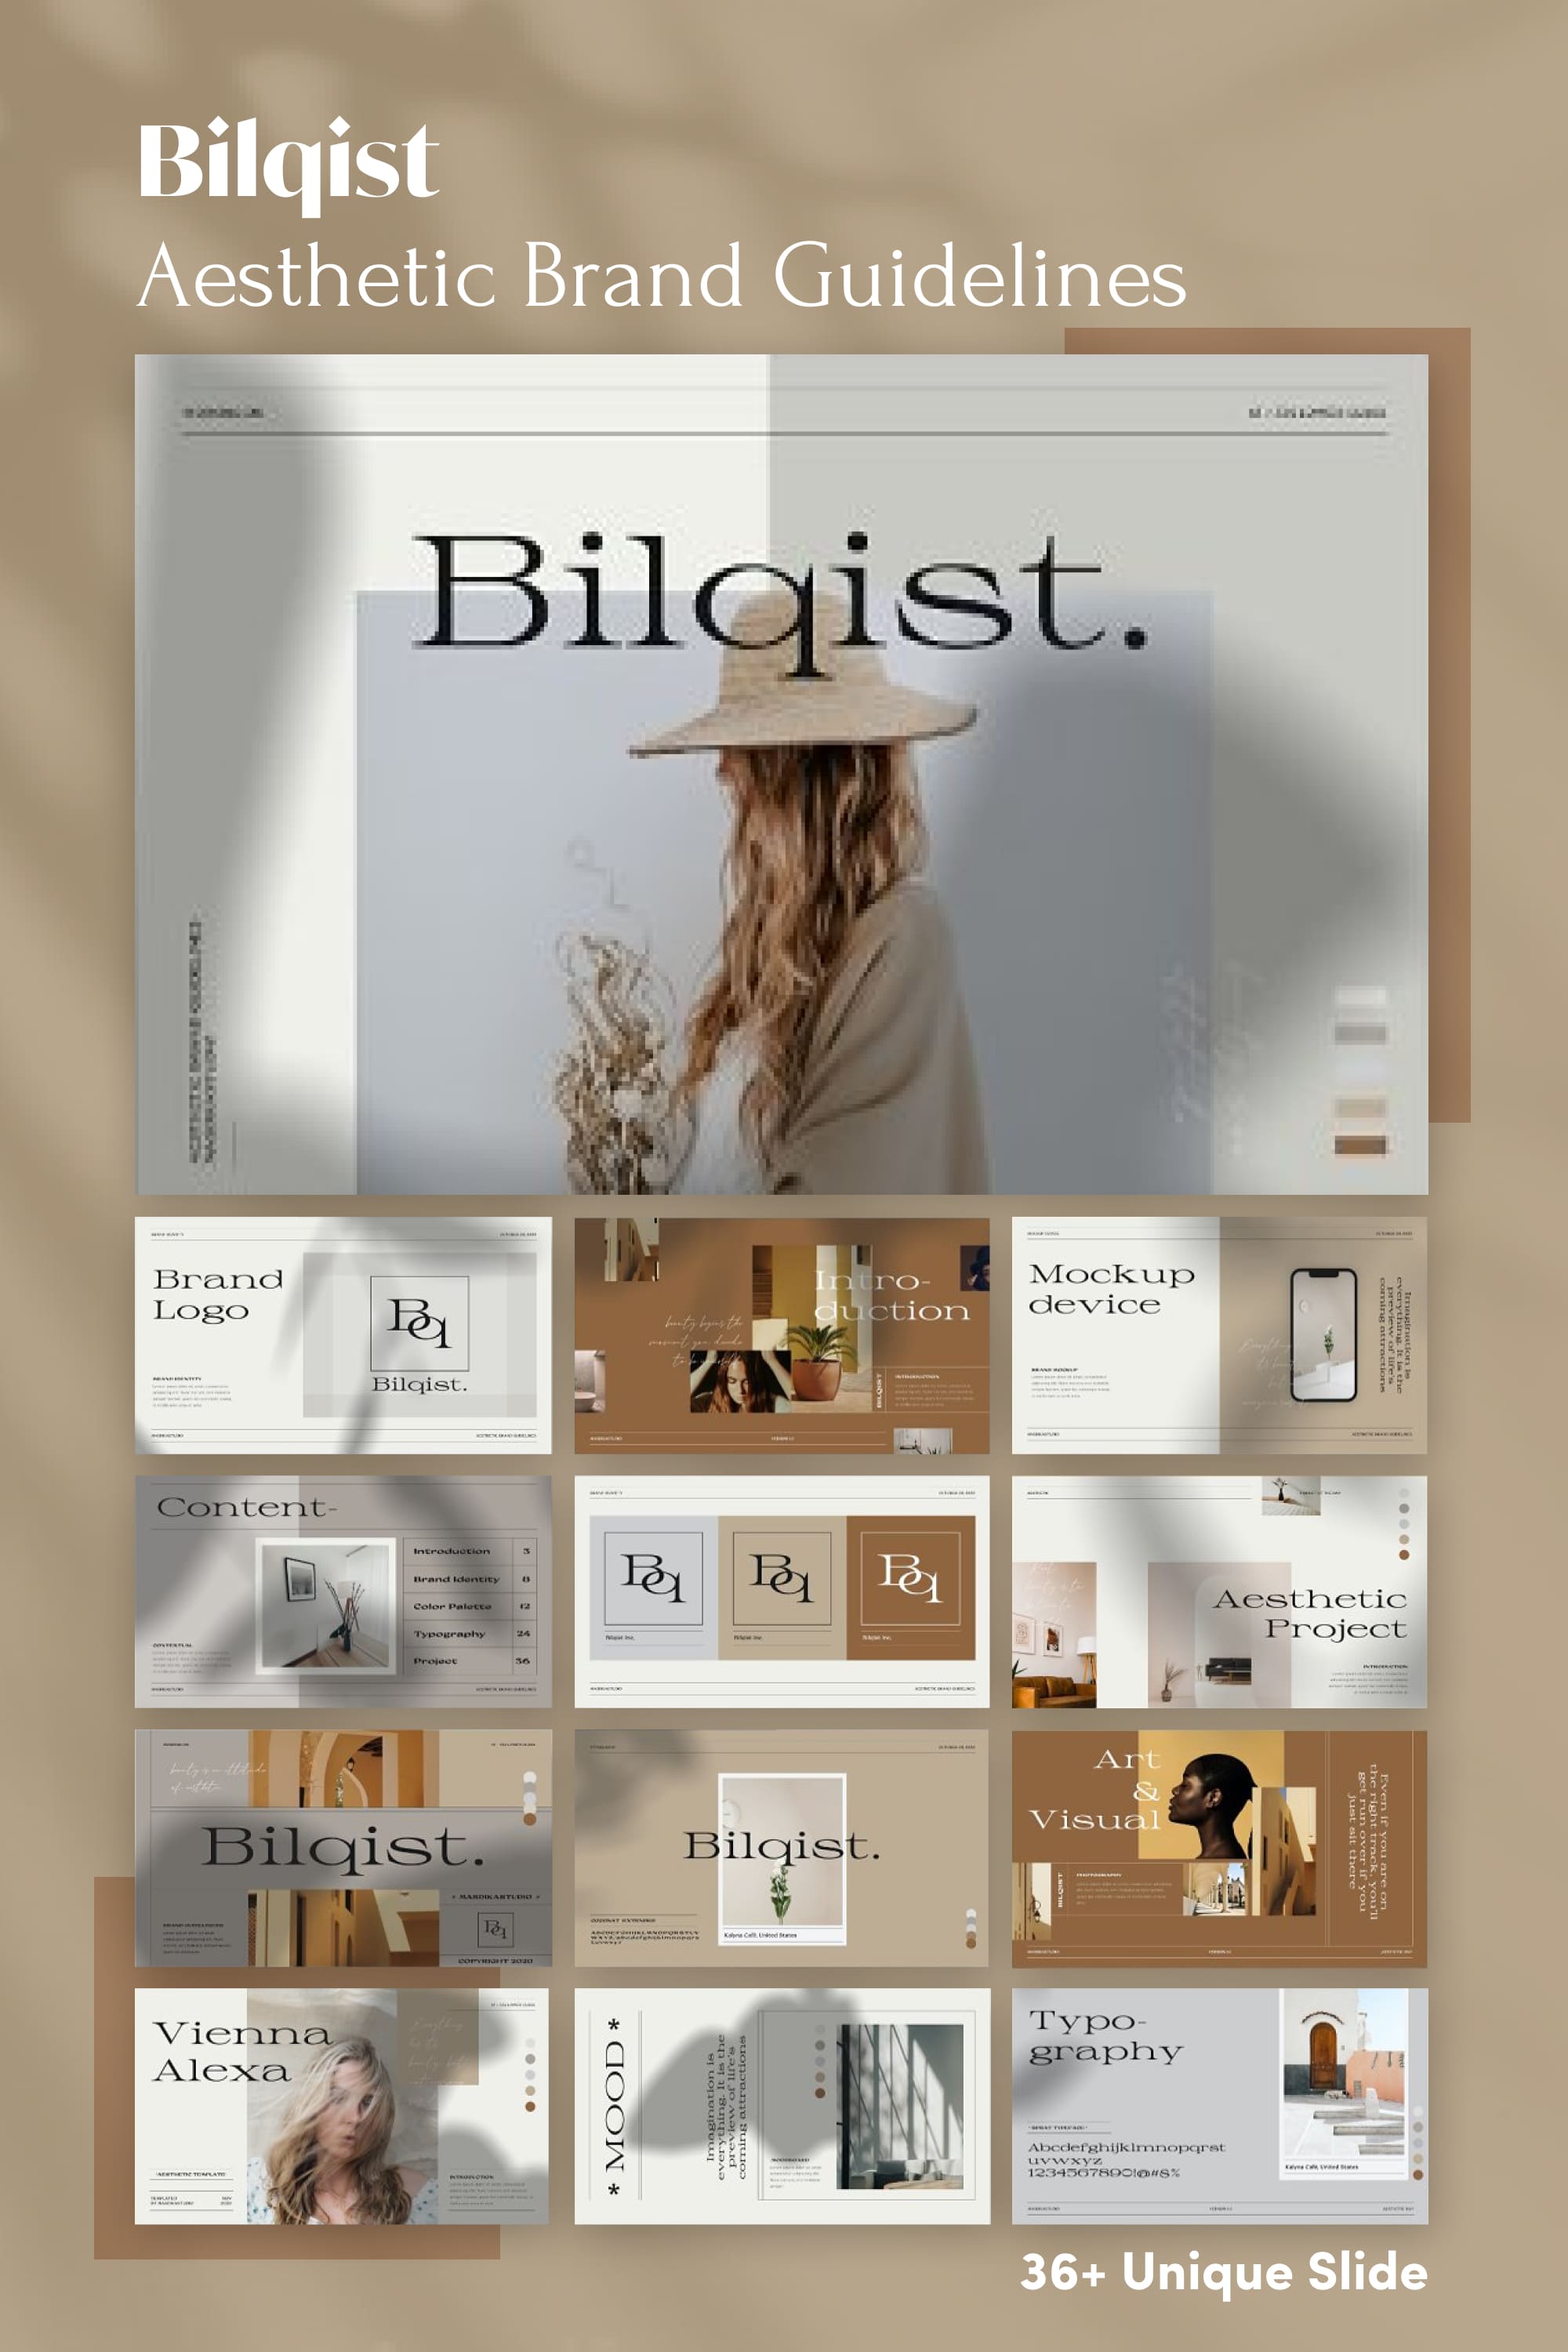 bilqist aesthetic brand guidelines pinterest